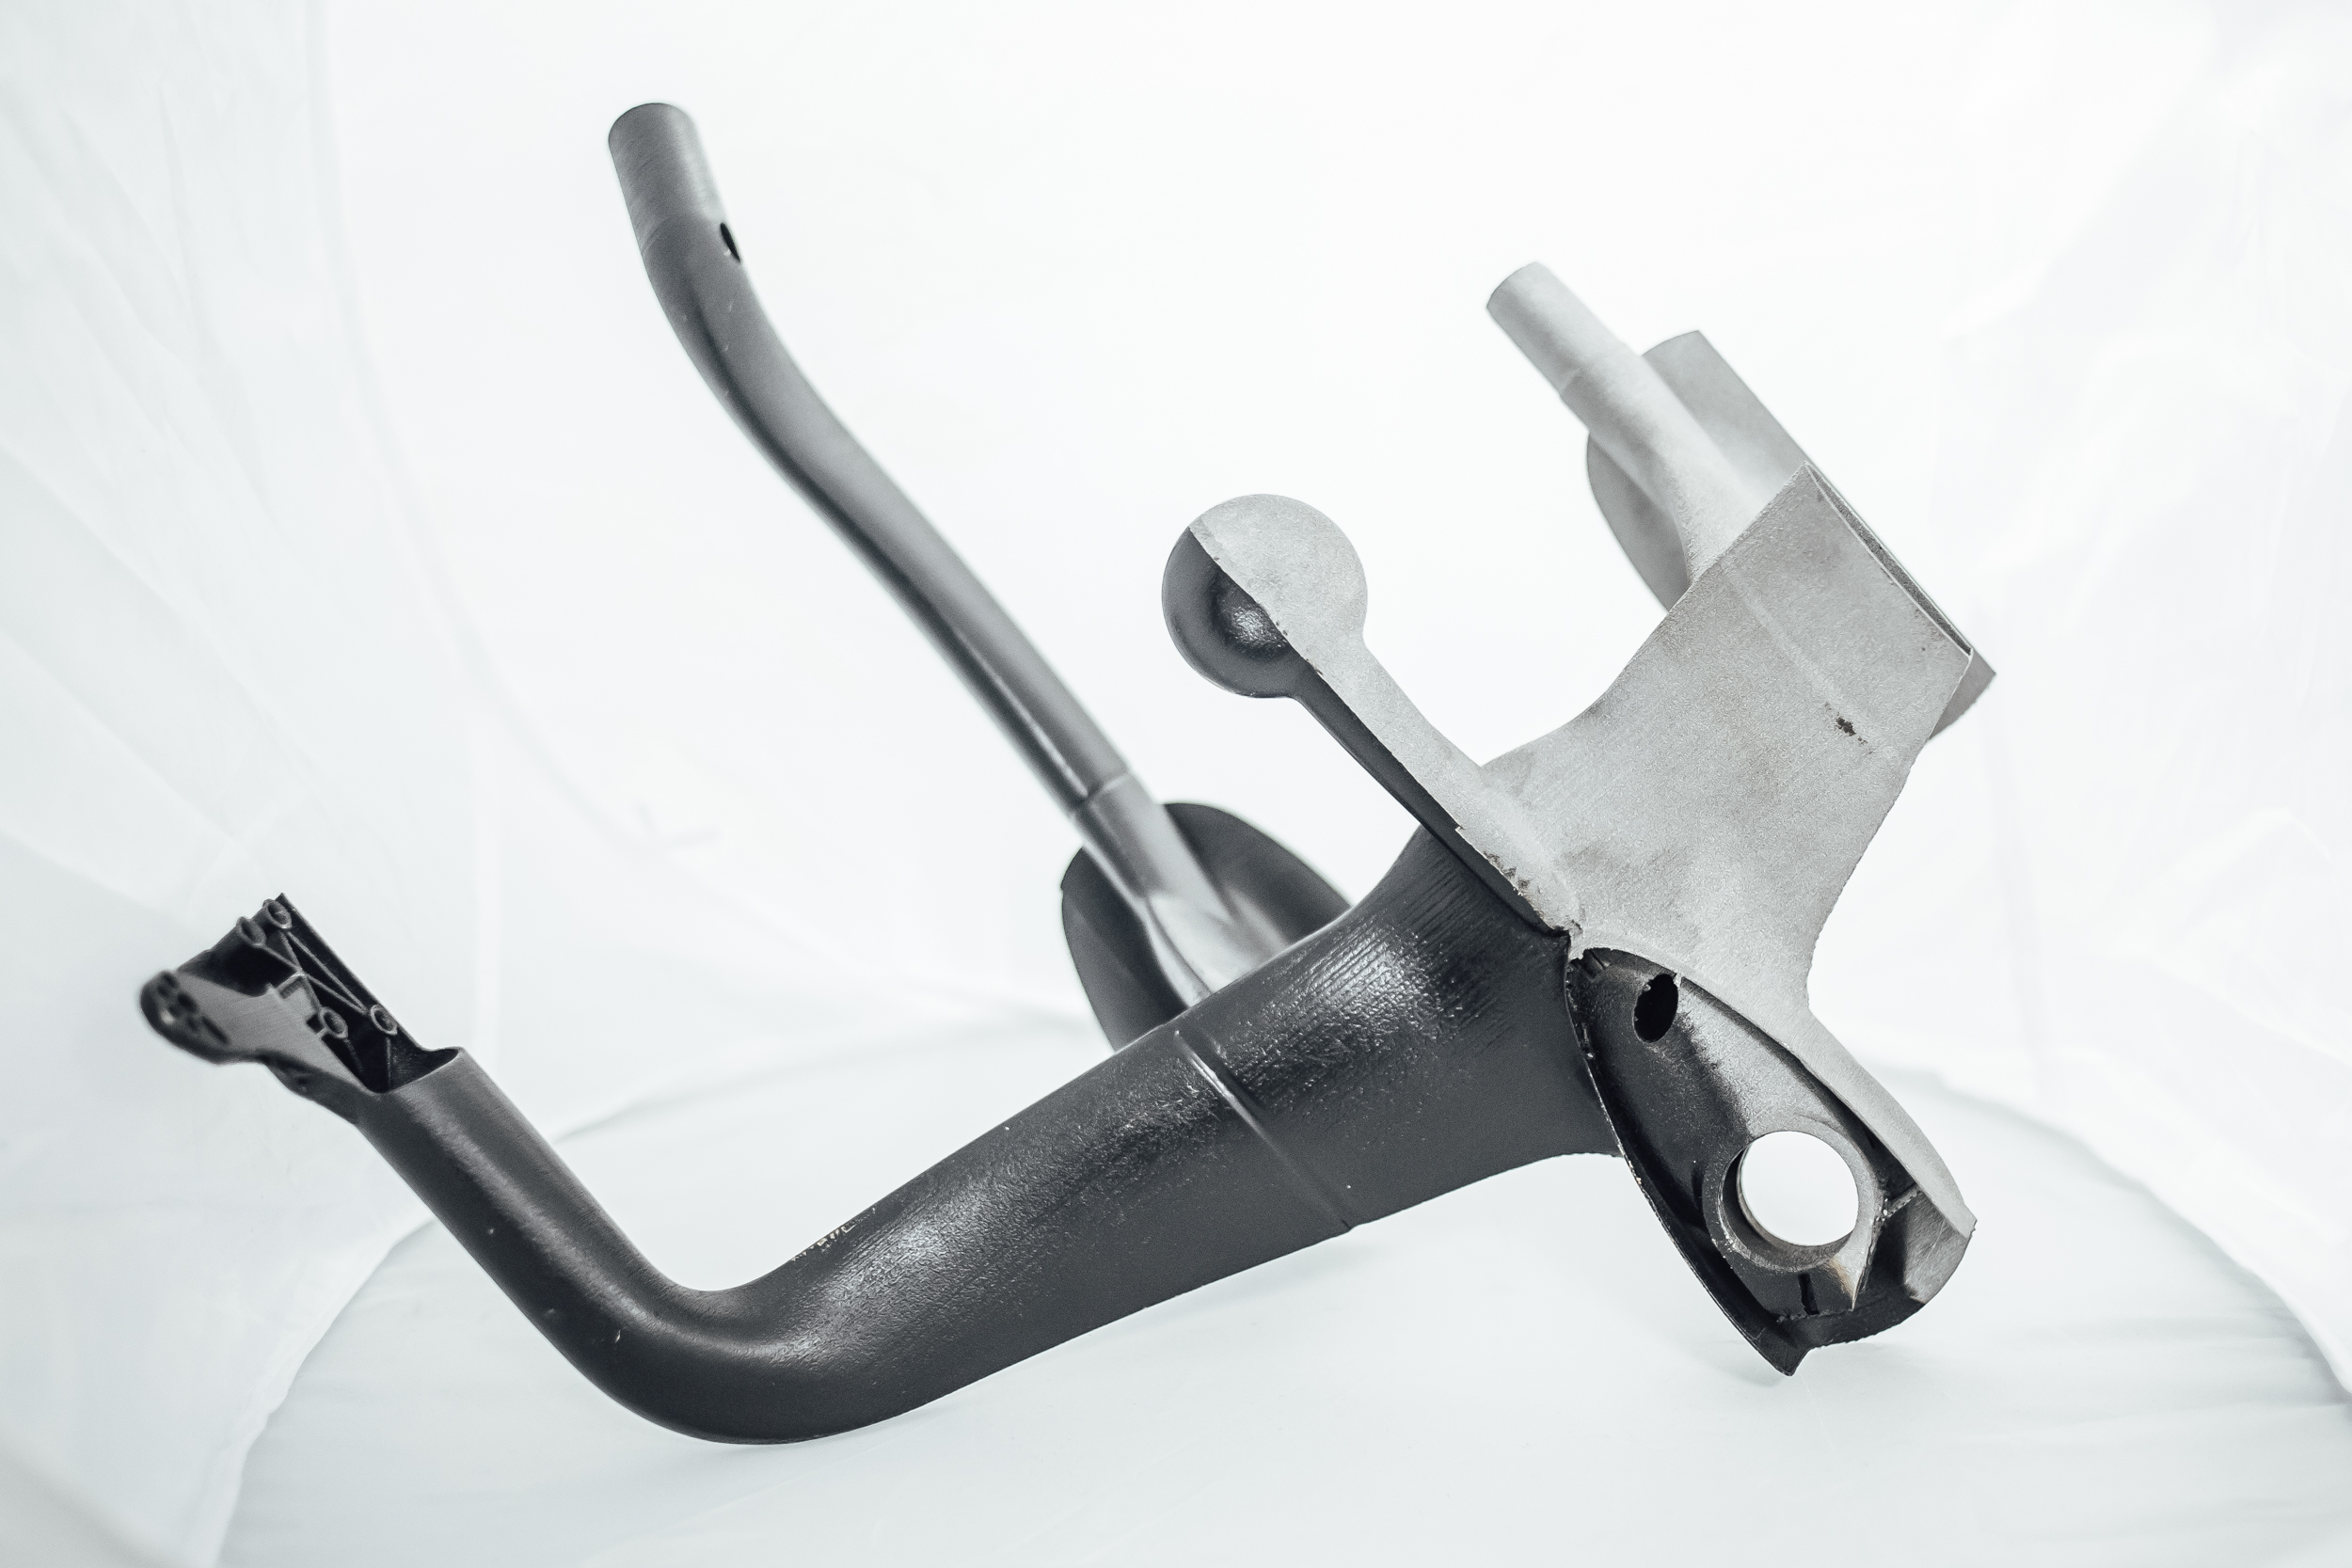 Artifact: Part of super lightweight, aerodynamic stem and handlebars (cover image)